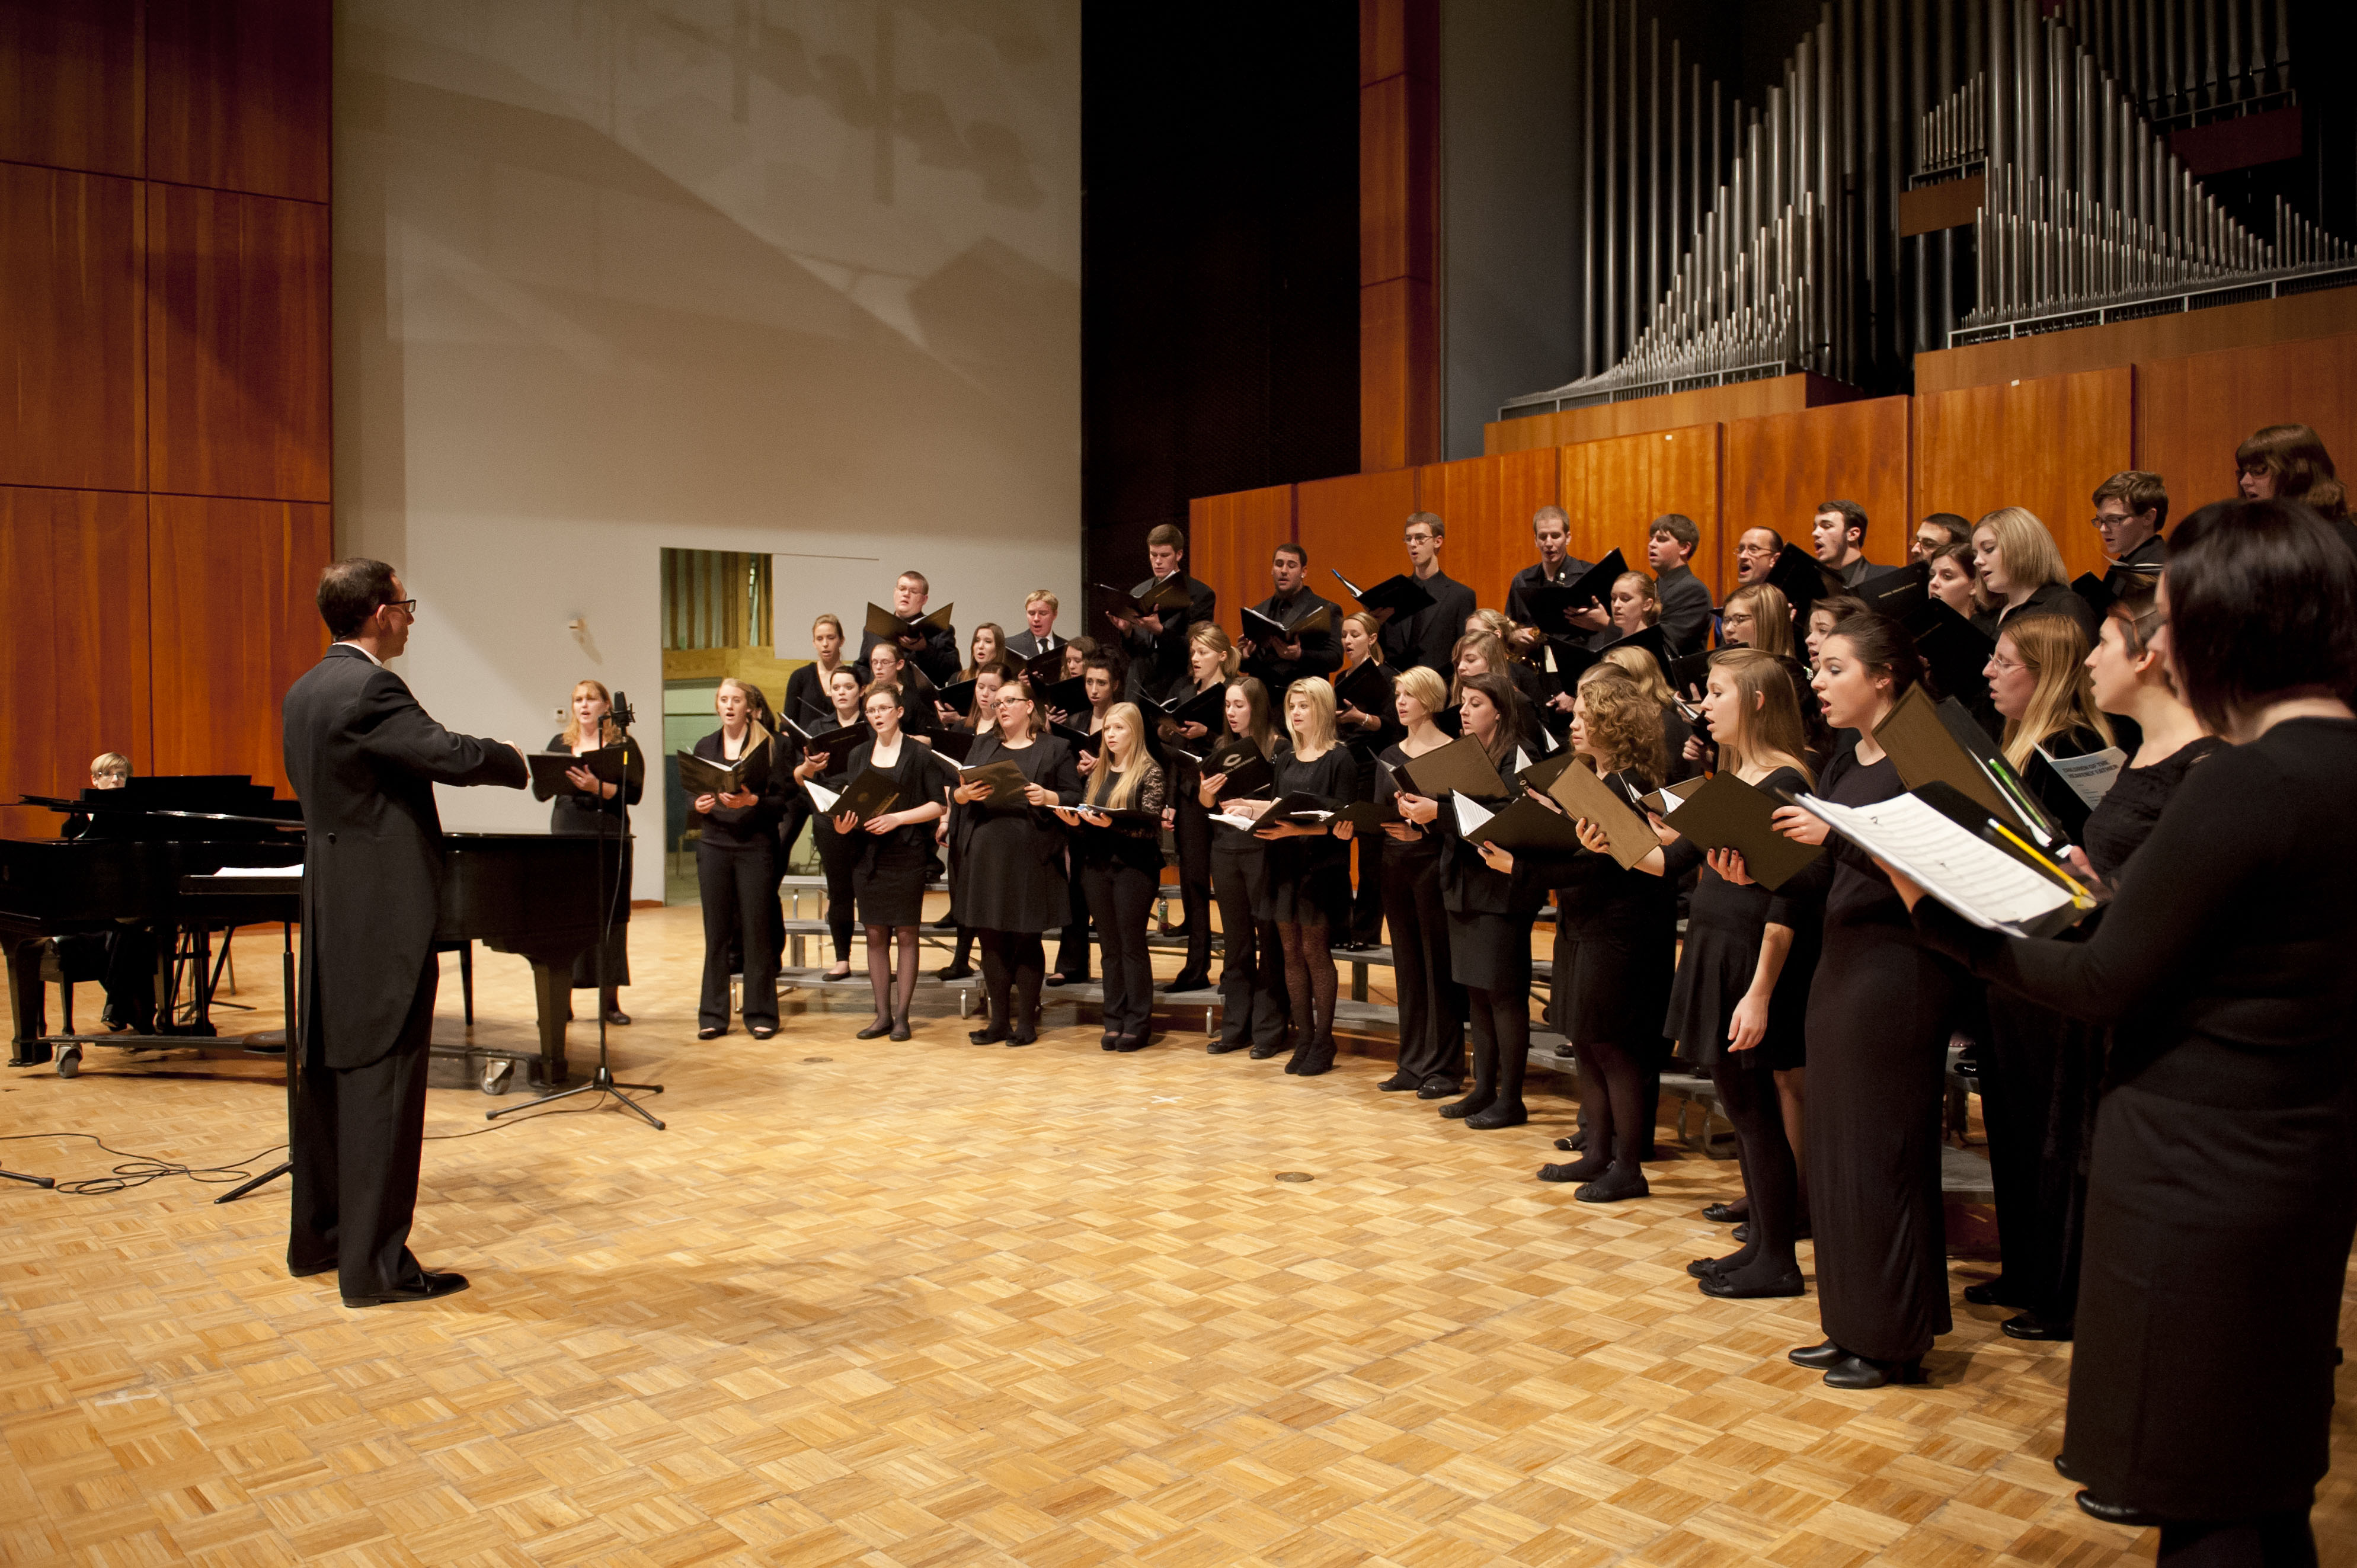 Carroll Choirs sing praise of “New York, New York”